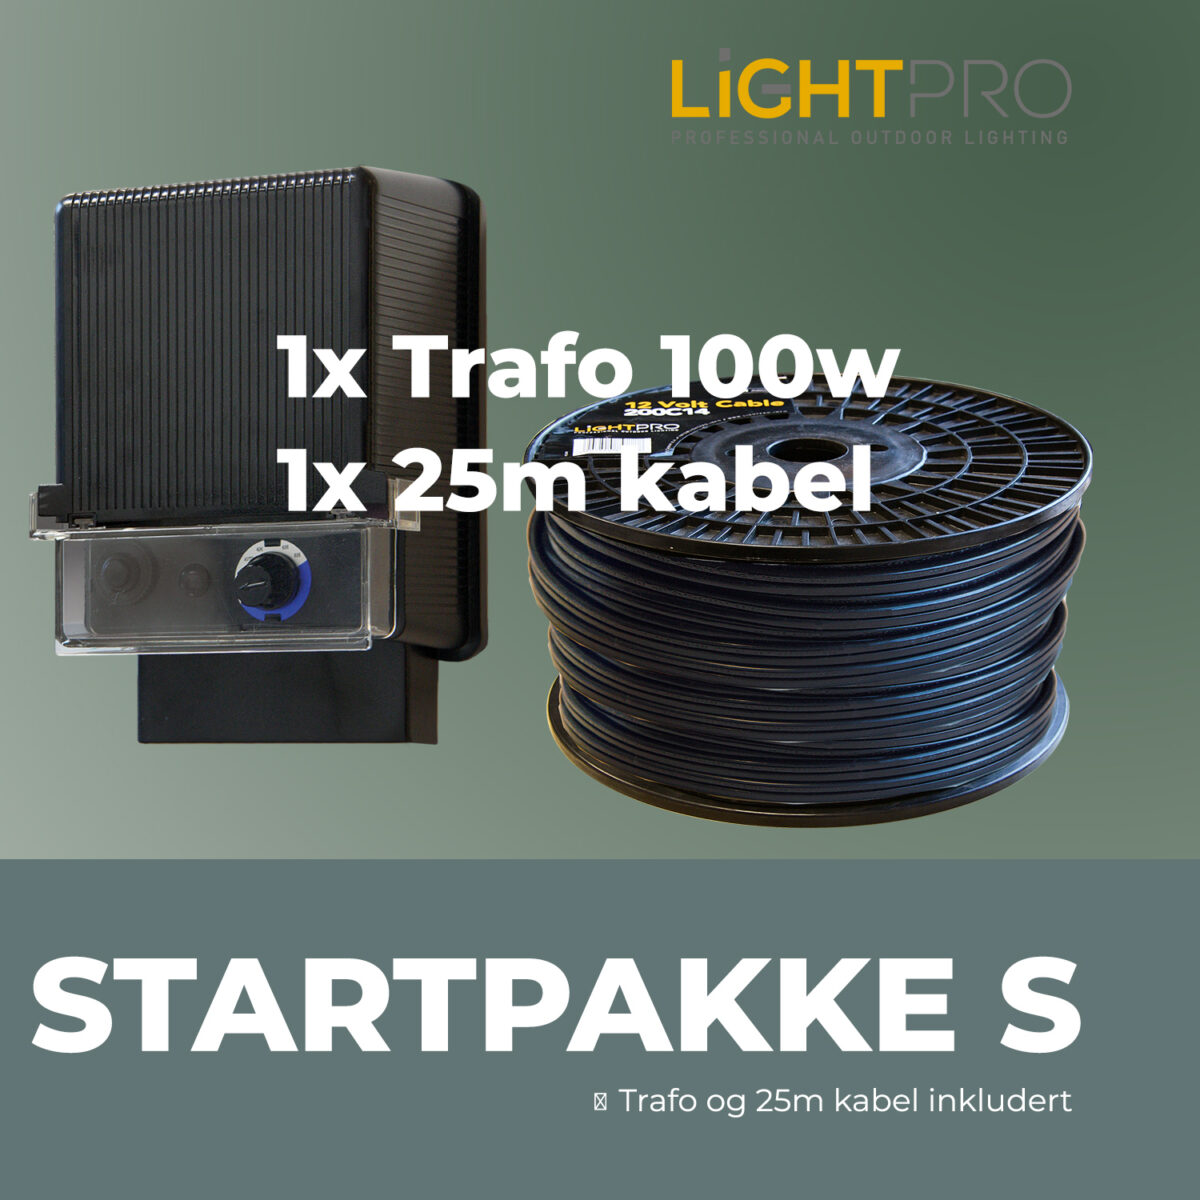 Lightpro Startpakke